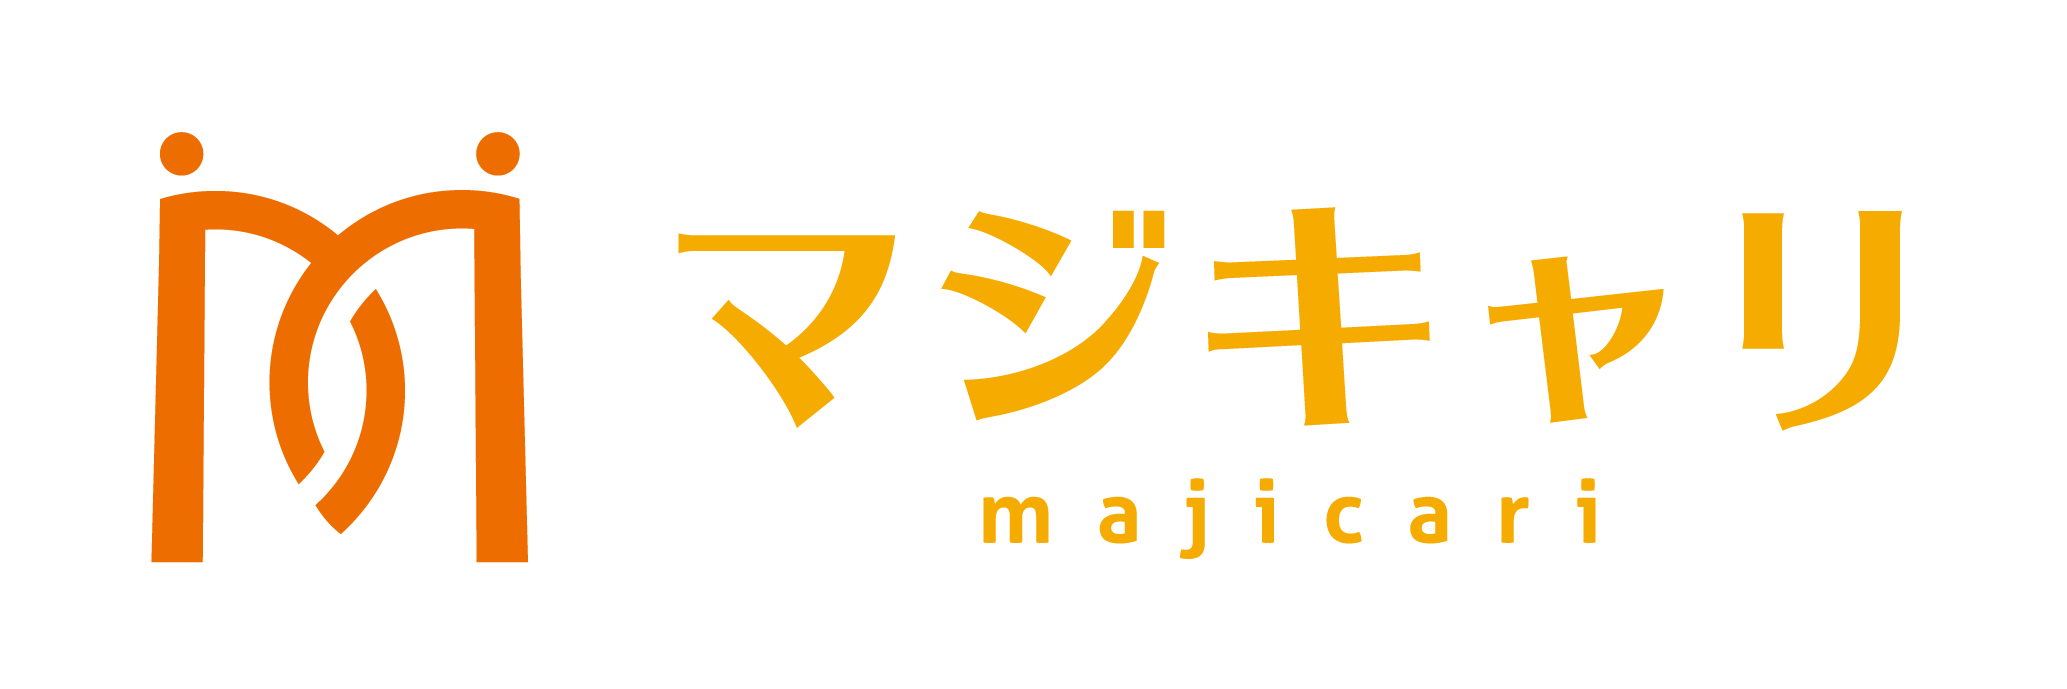 majicari-logo